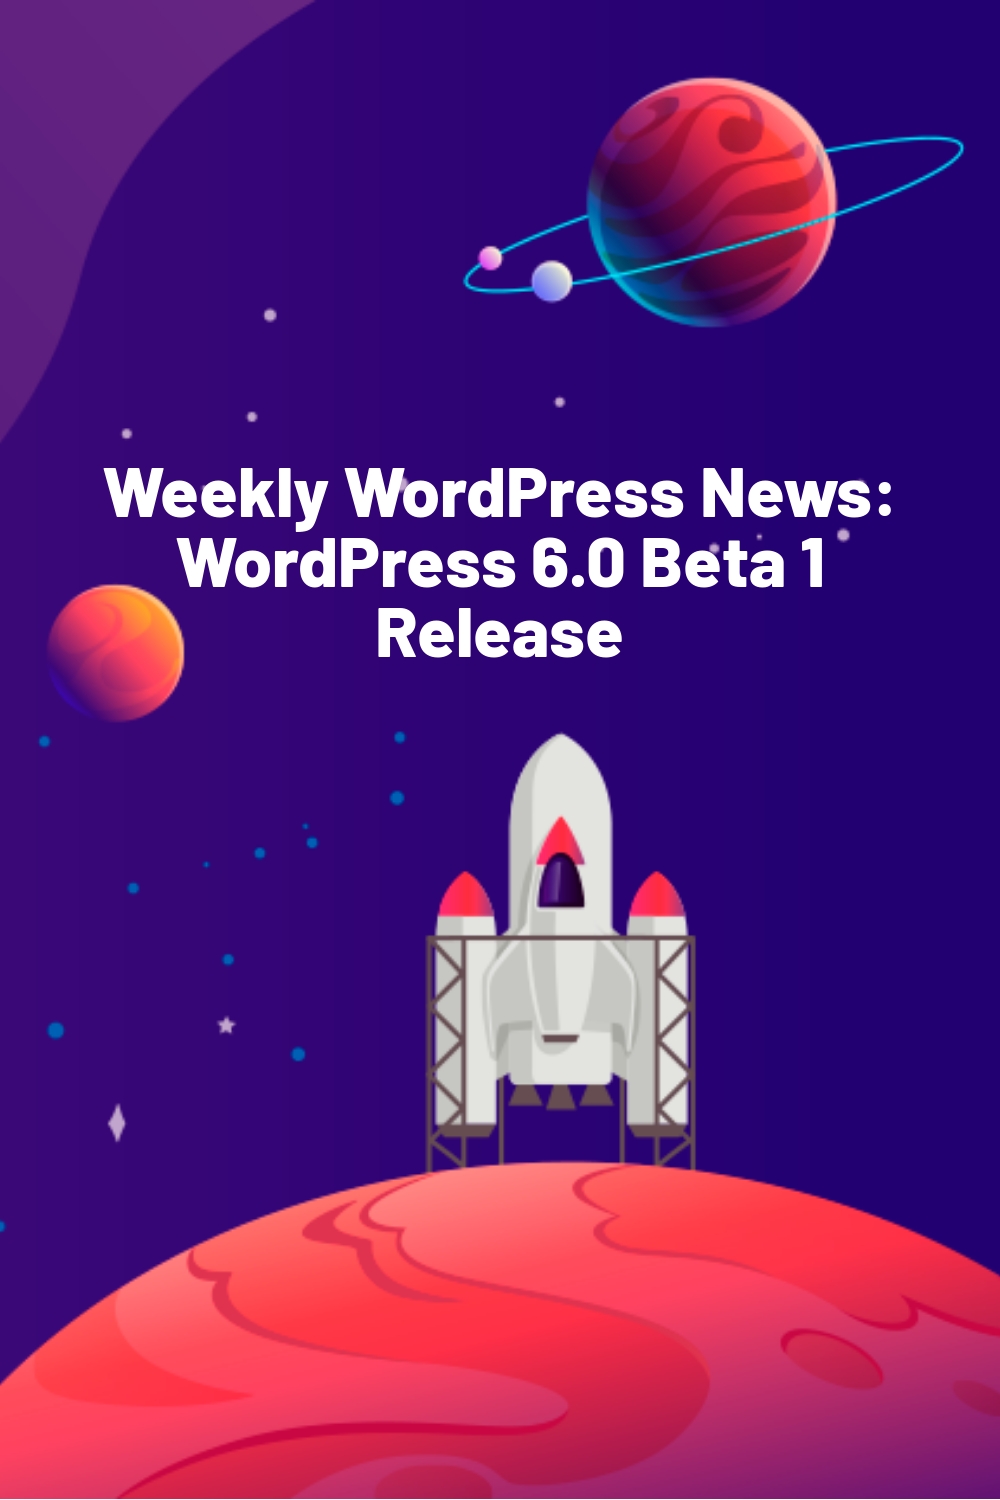 Weekly WordPress News: WordPress 6.0 Beta 1 Release